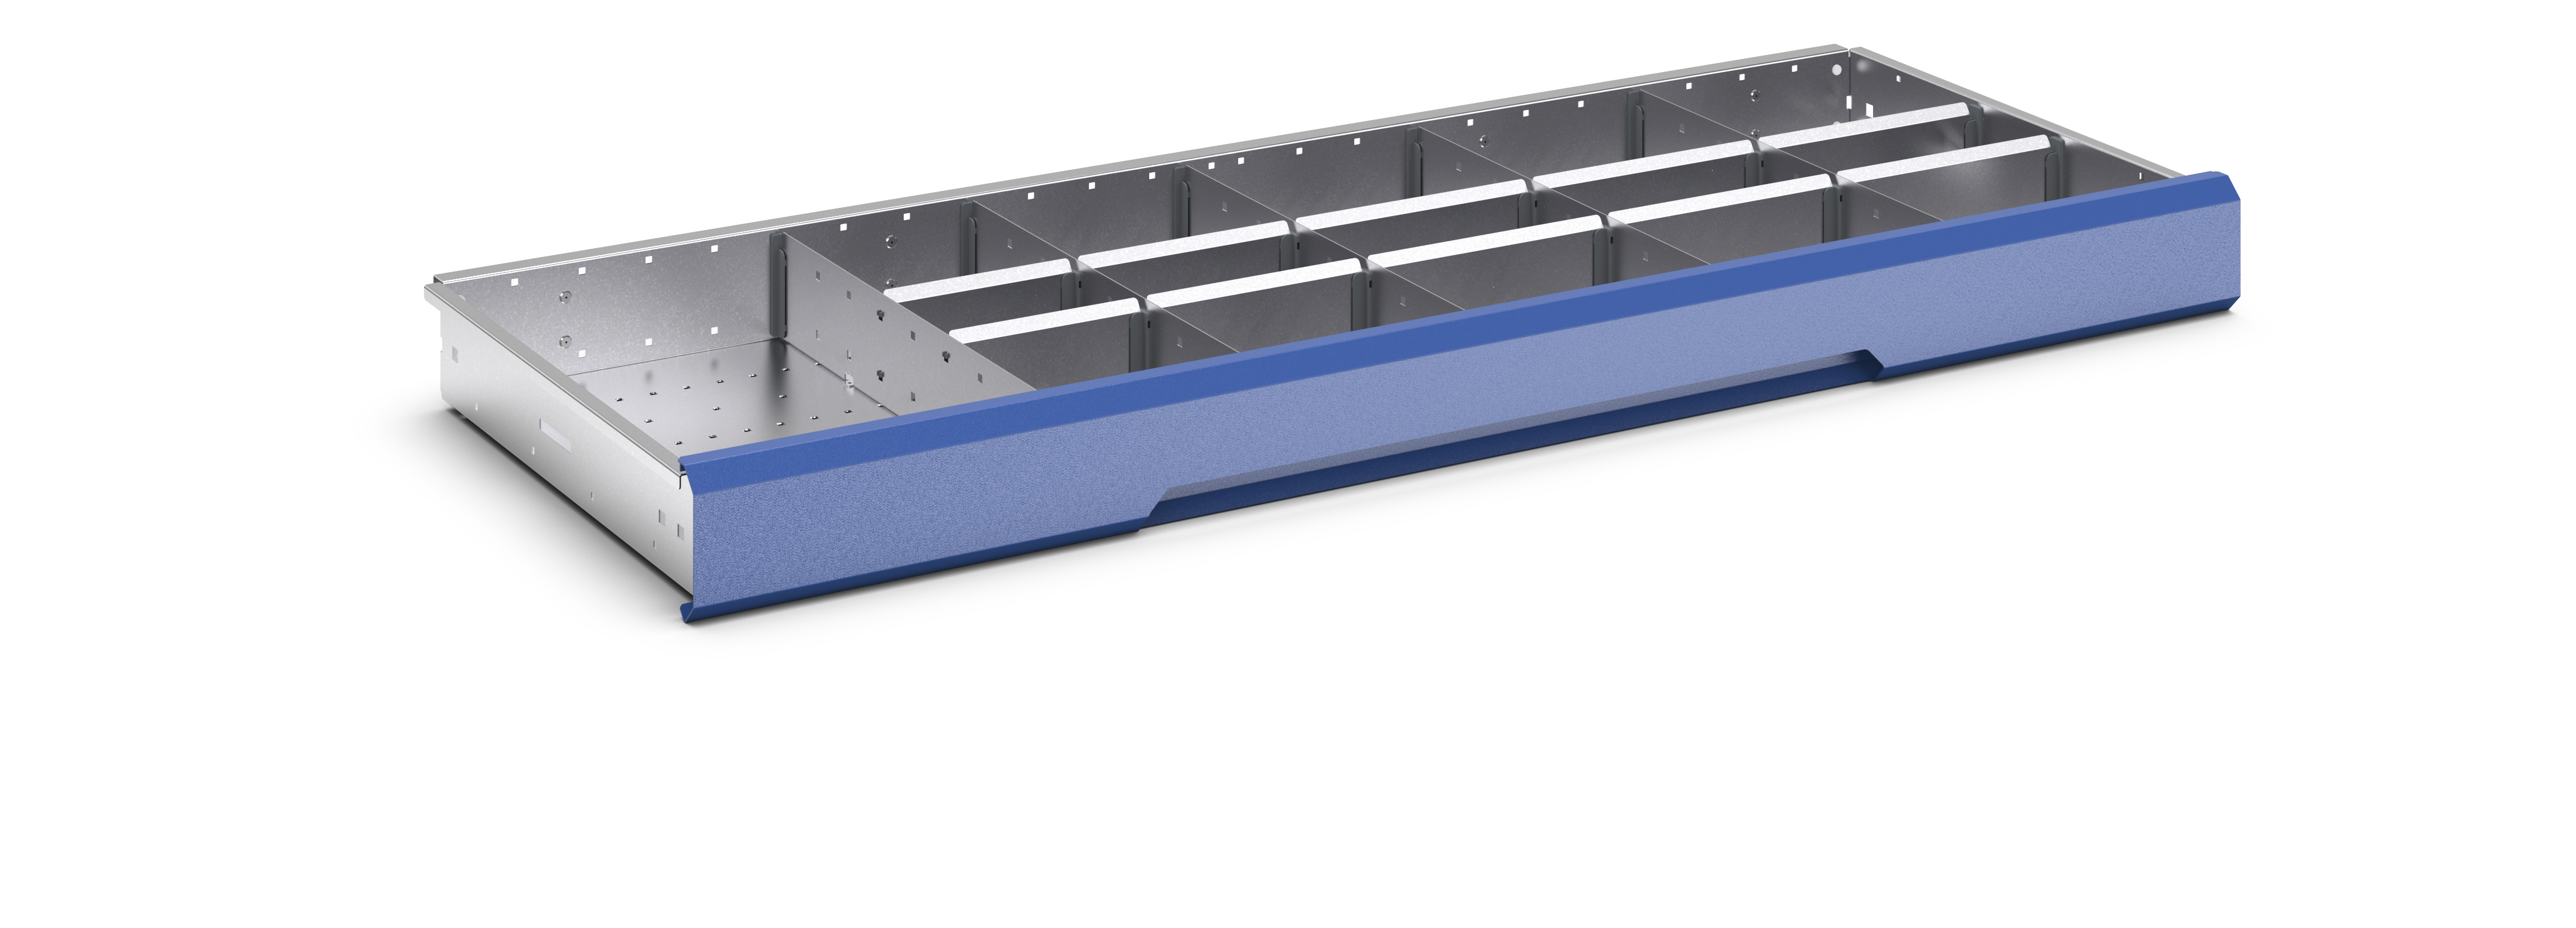 Bott Verso Adjustable Metal Divider Kit 16 Compartment - 16926863.51